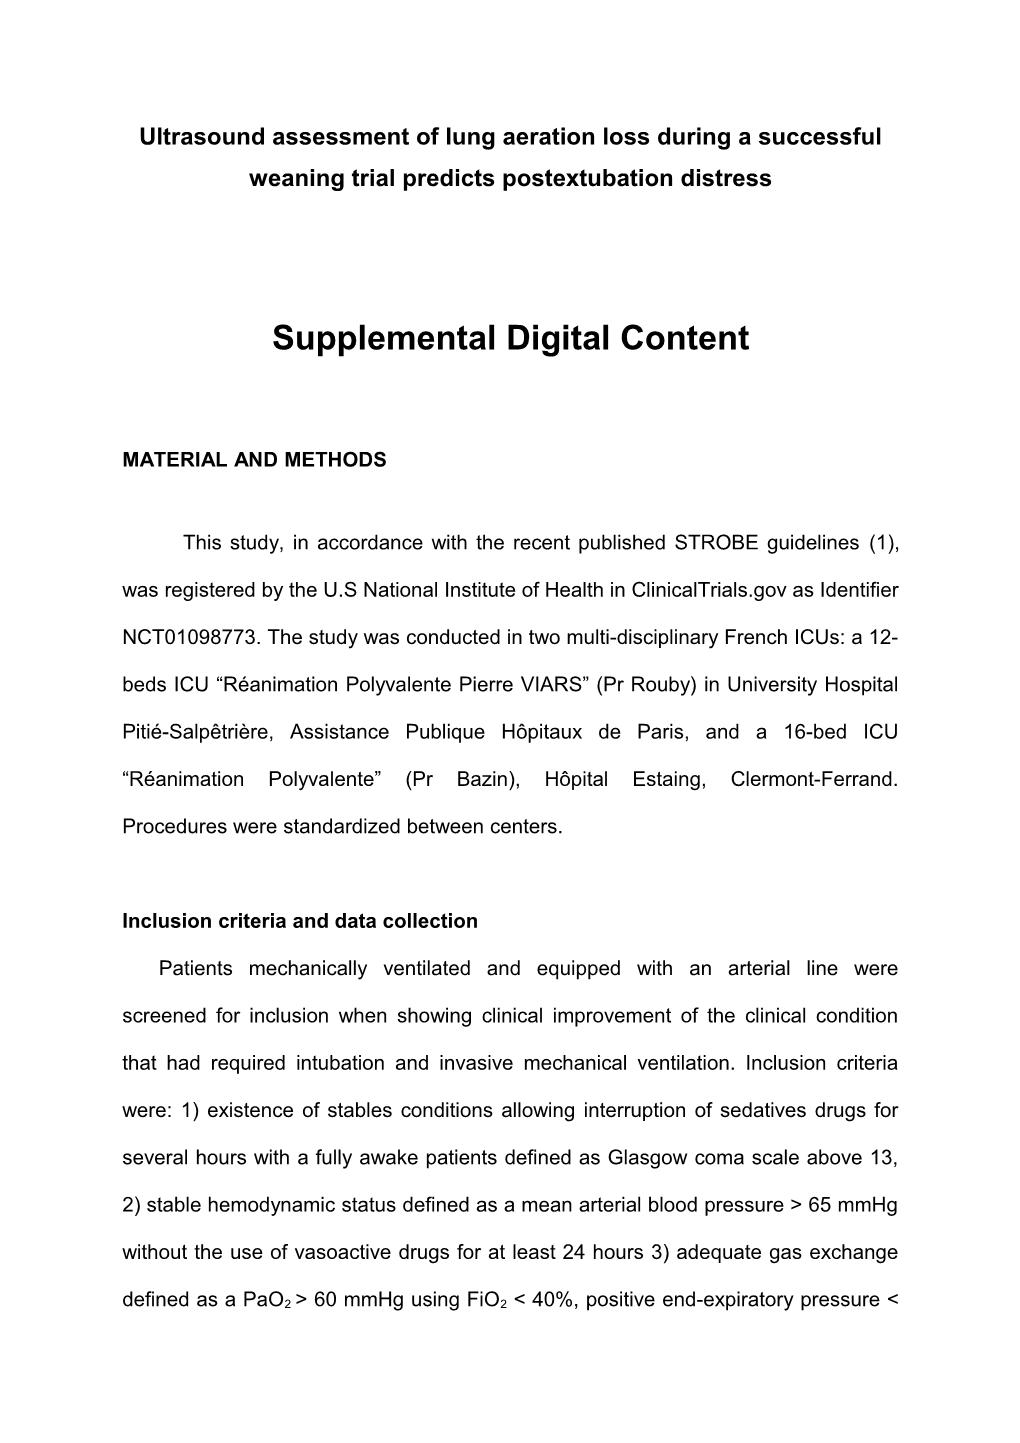 Revised Supplemental Digital Content 2